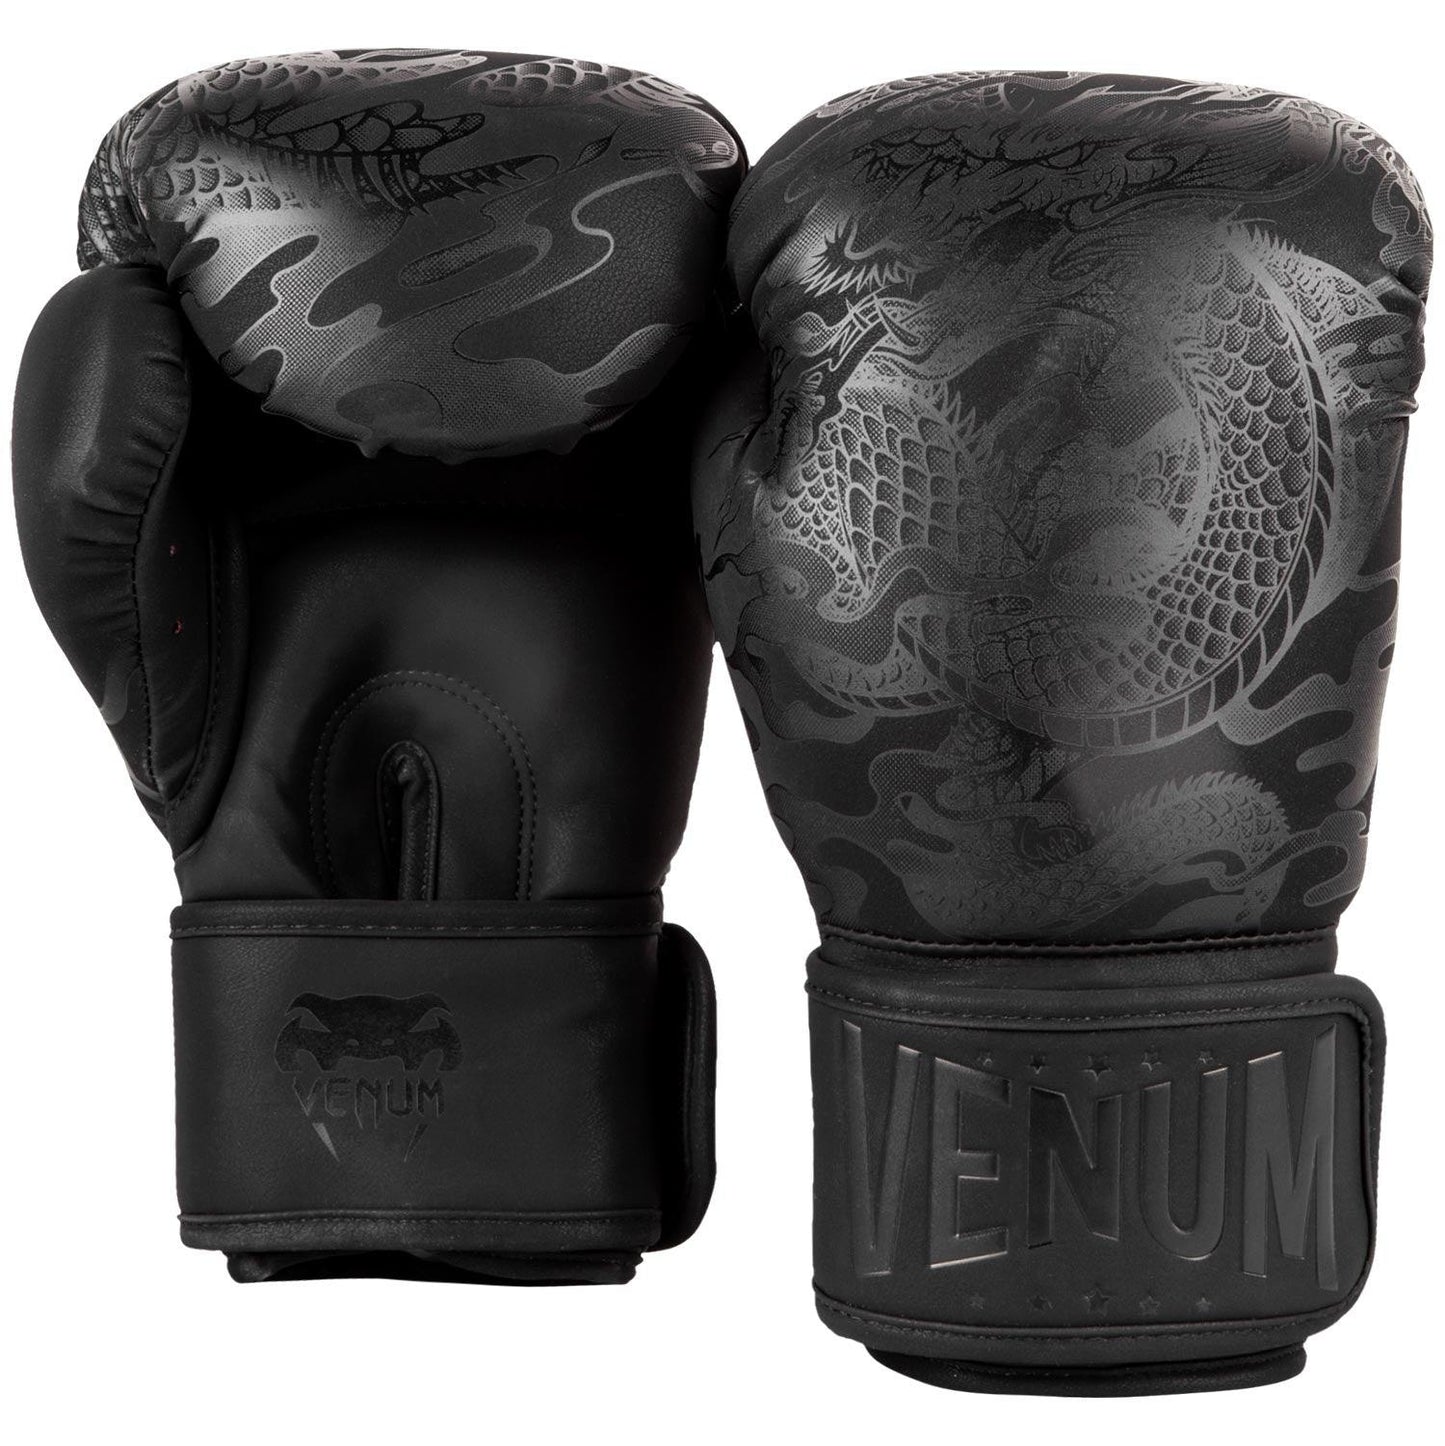 Venum Dragon's Flight Boxing Gloves - Black/Black Picture 3